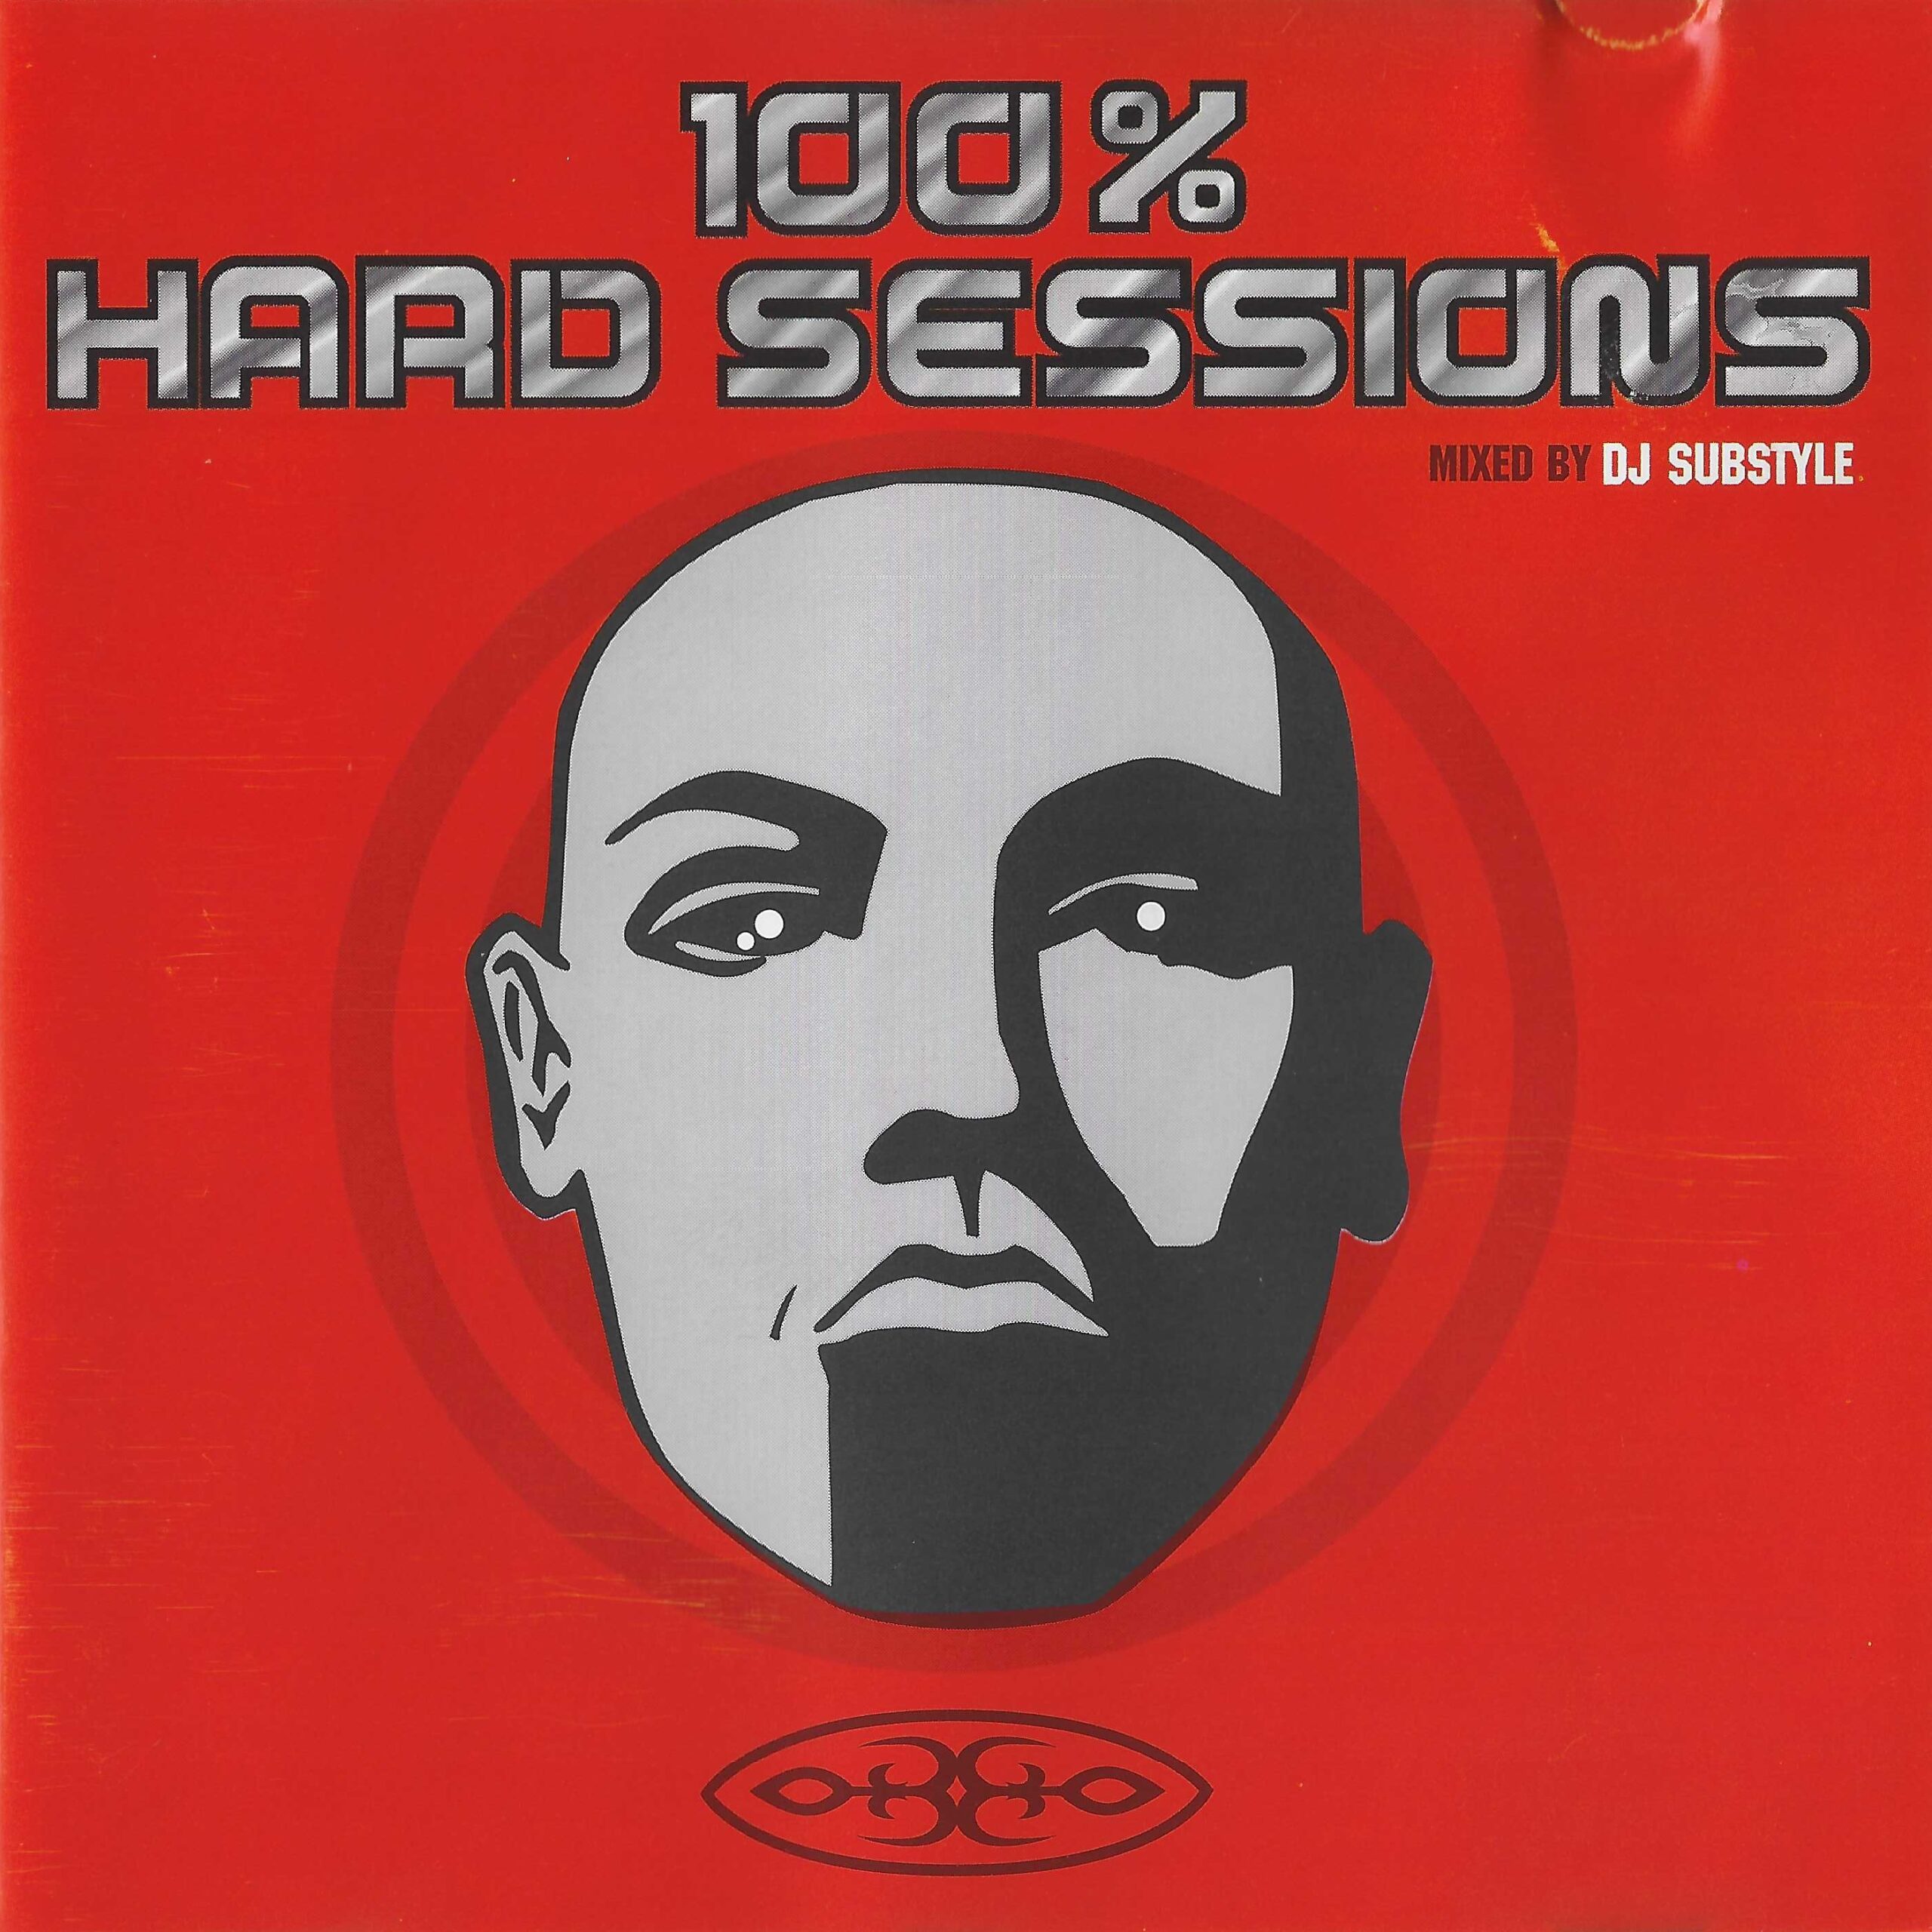 100% Hard Sessions